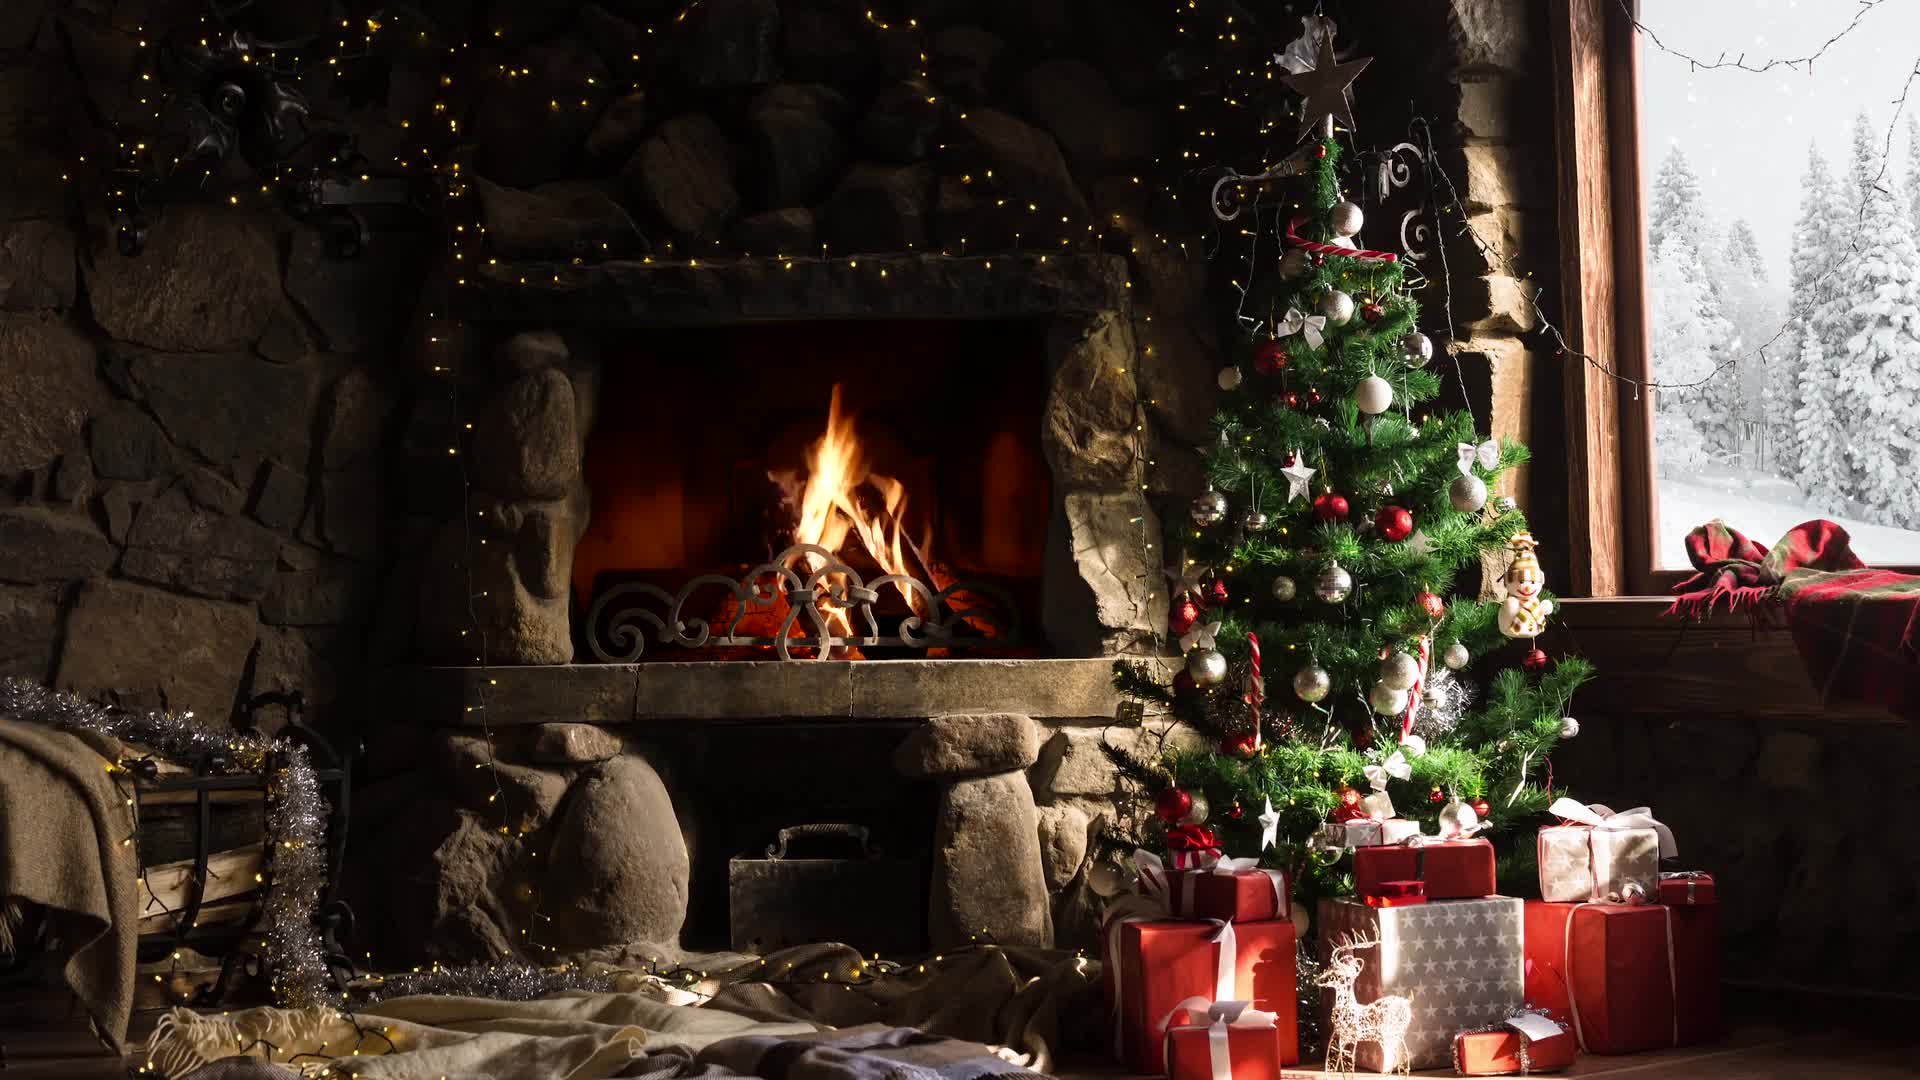 Christmas Tree and Fireplace Animated Wallpaper